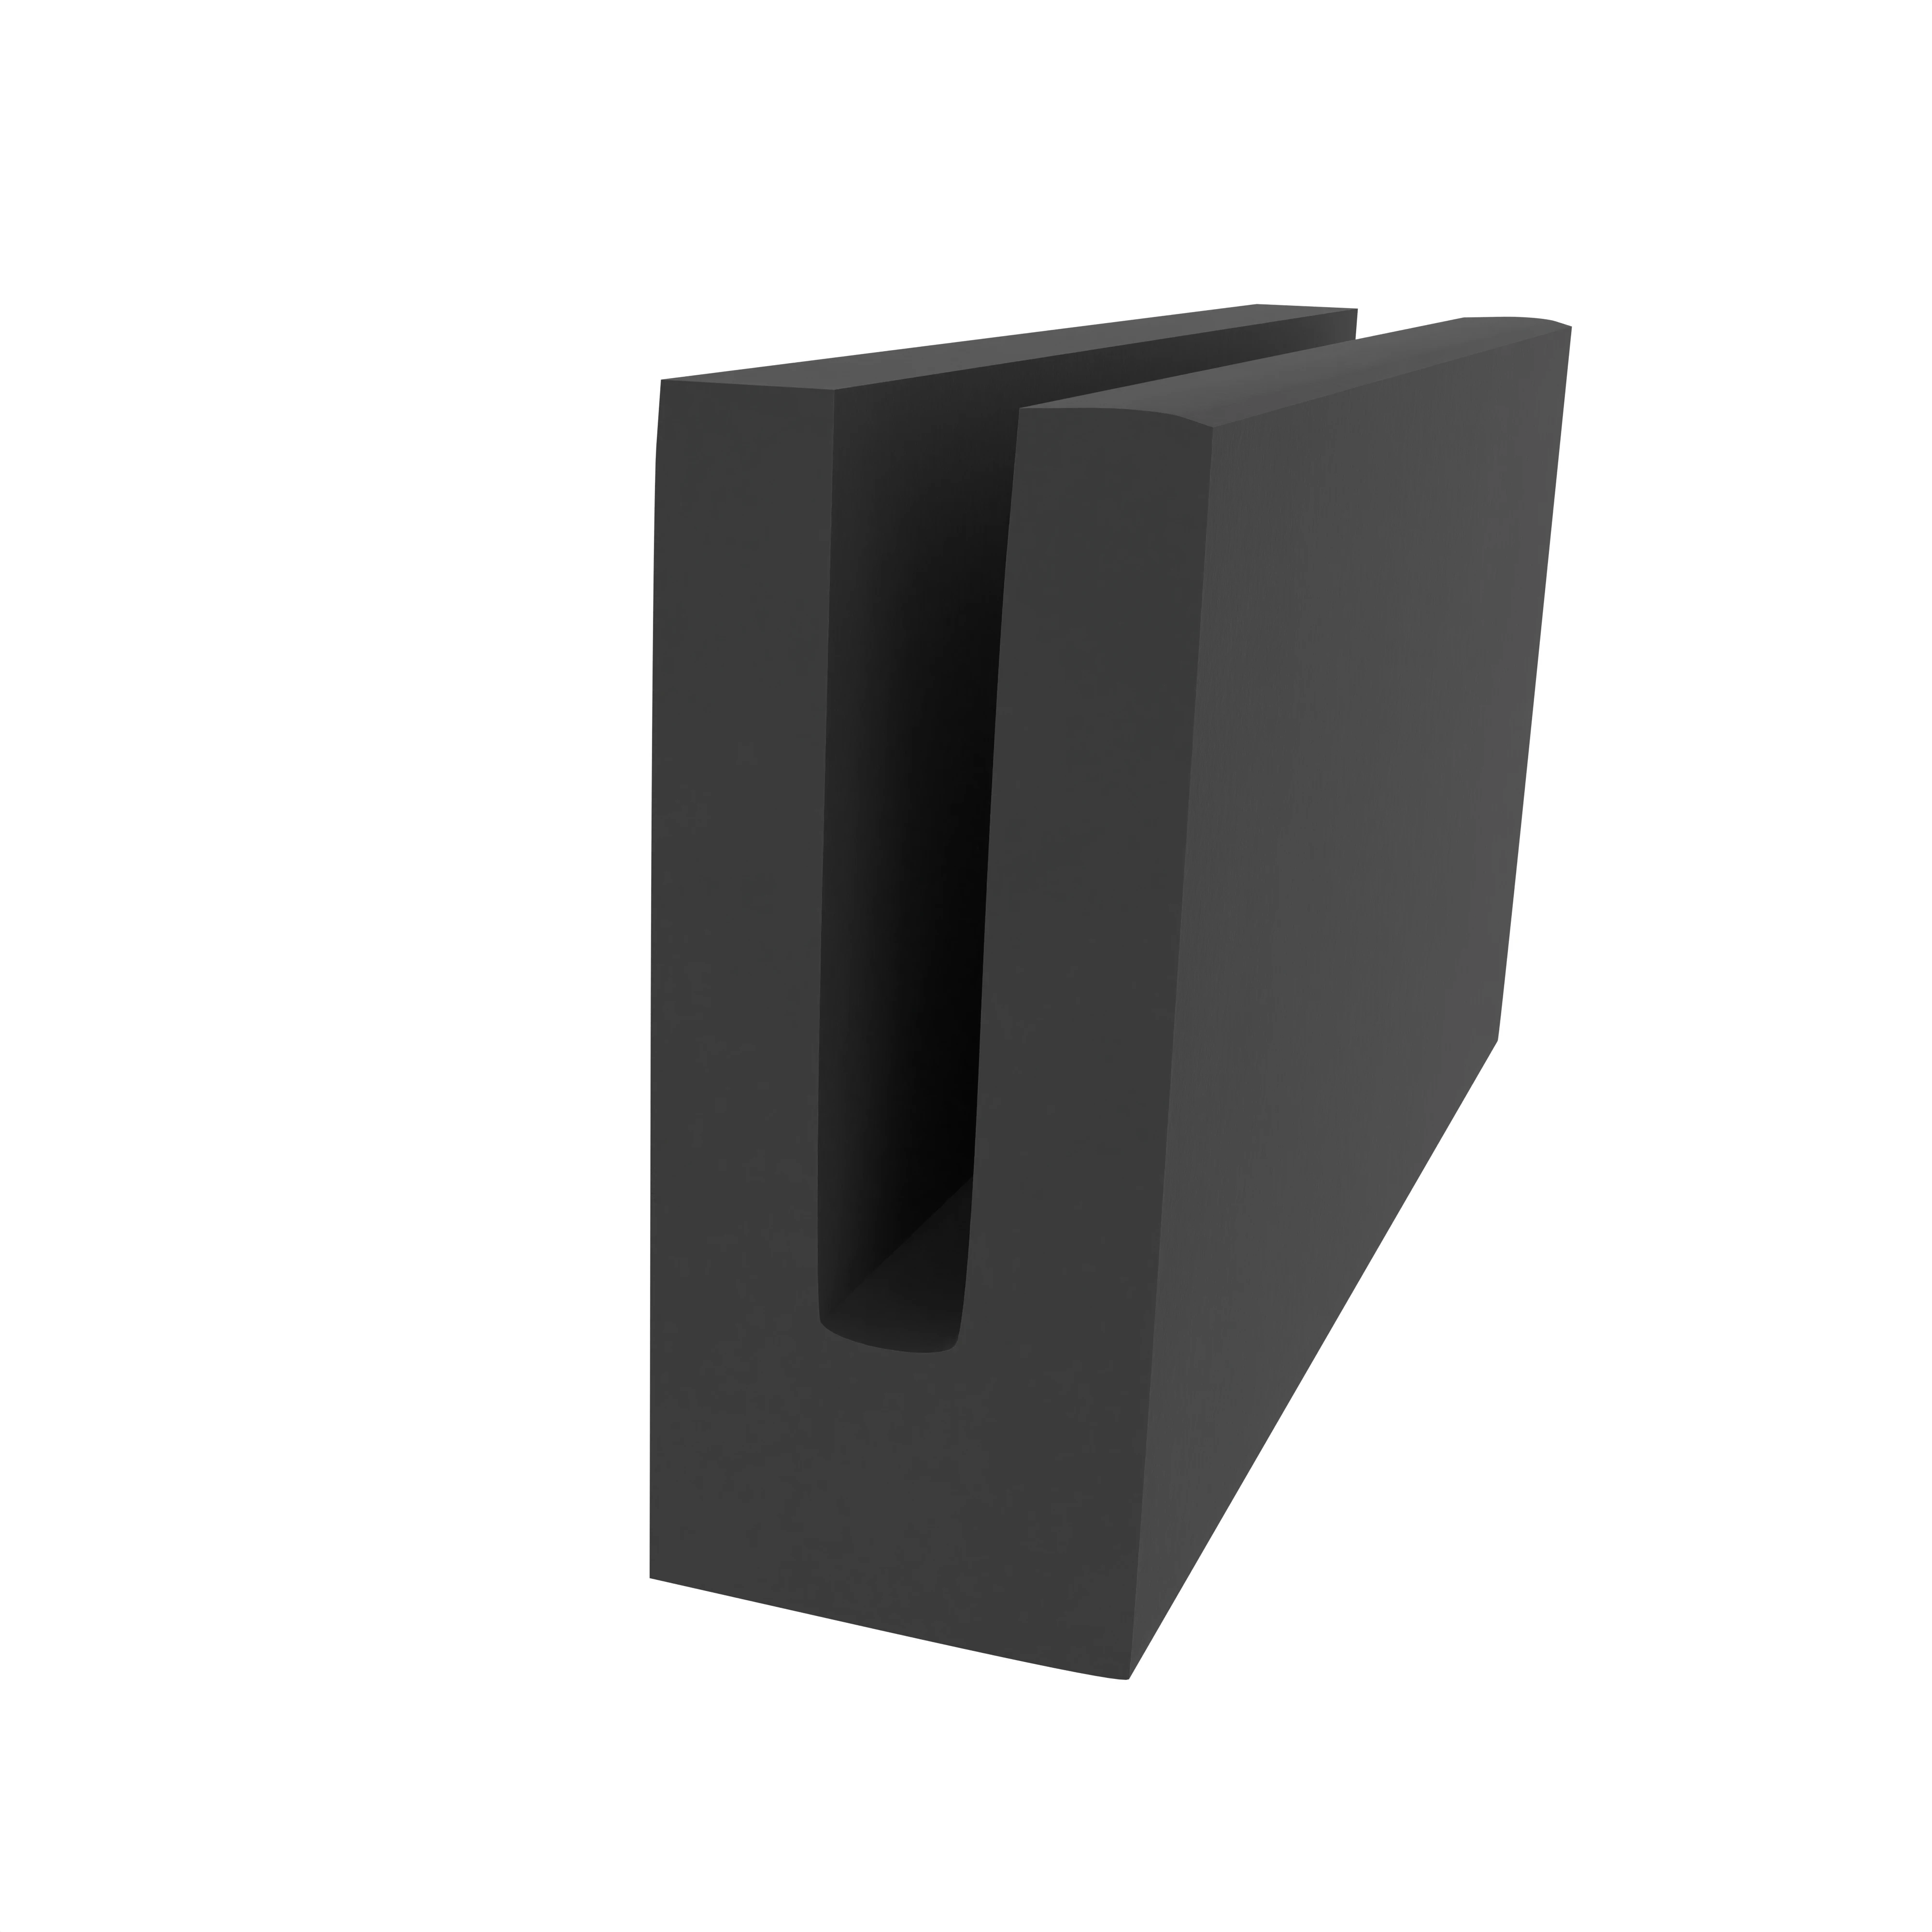 Kantenschutzprofil | Höhe: 8 mm | Farbe: schwarz